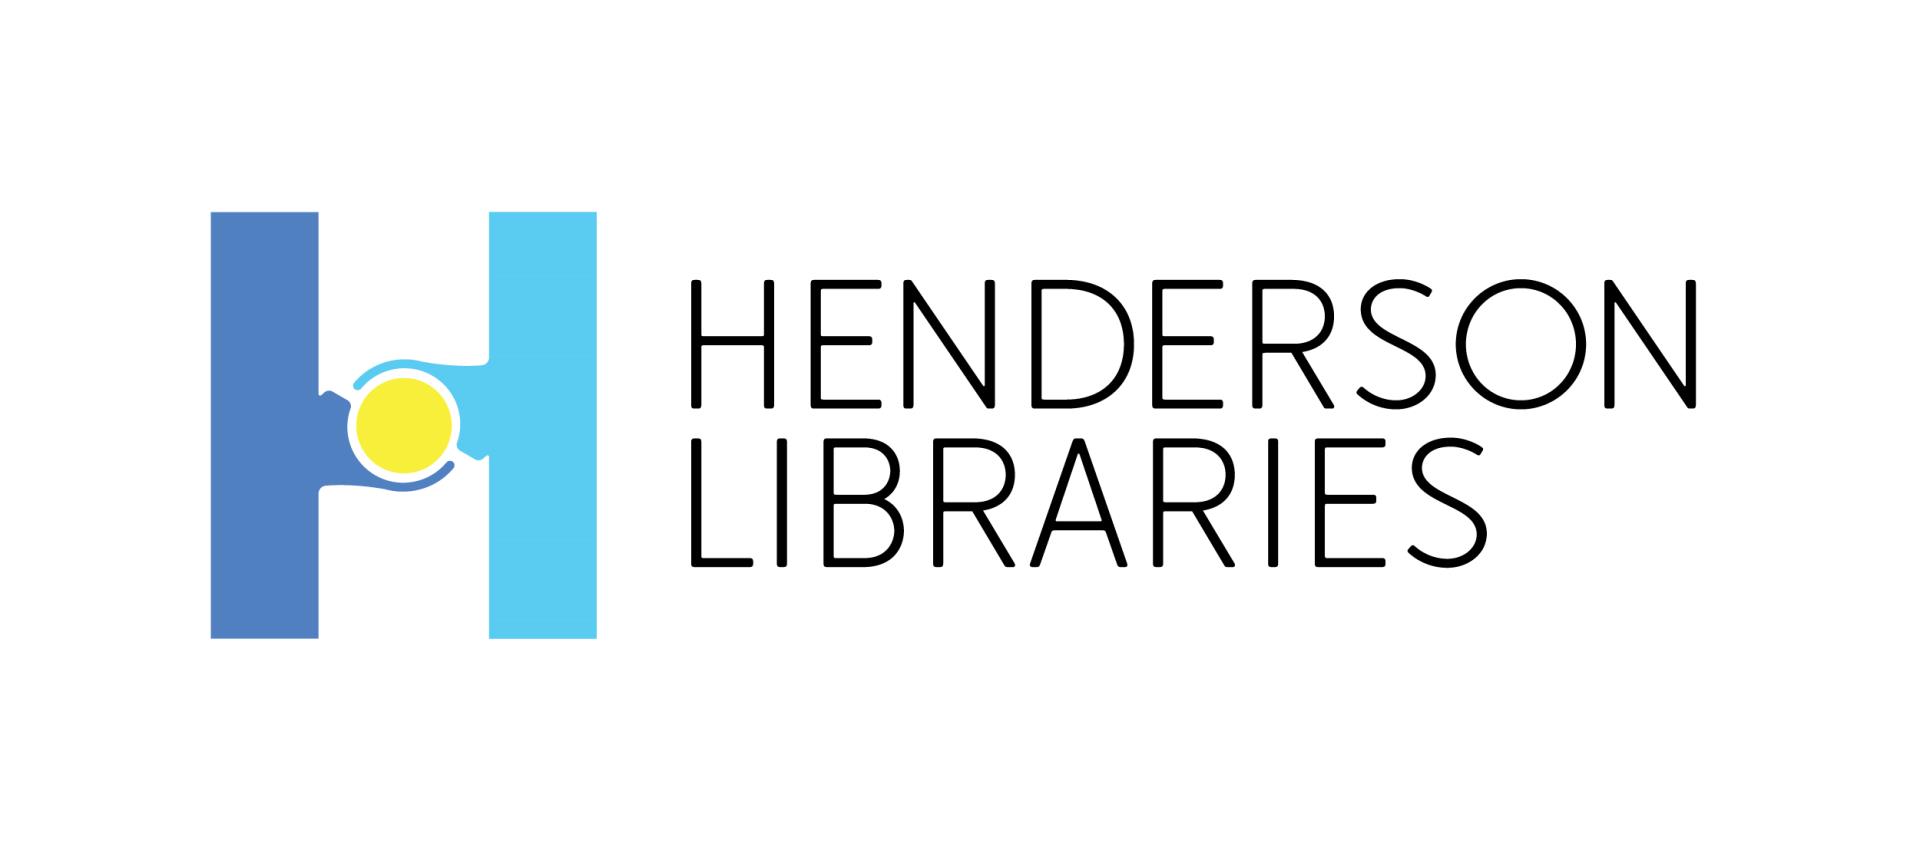 Henderson Library